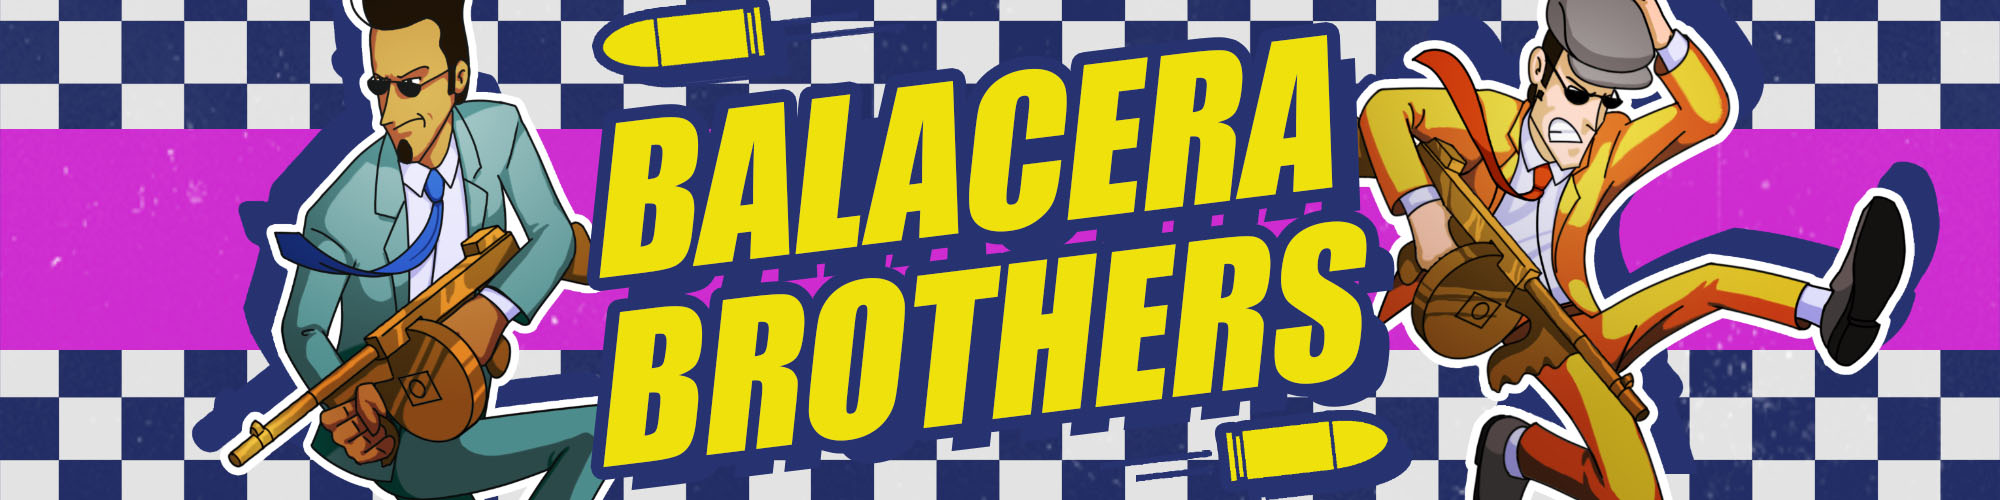 Balacera Brothers